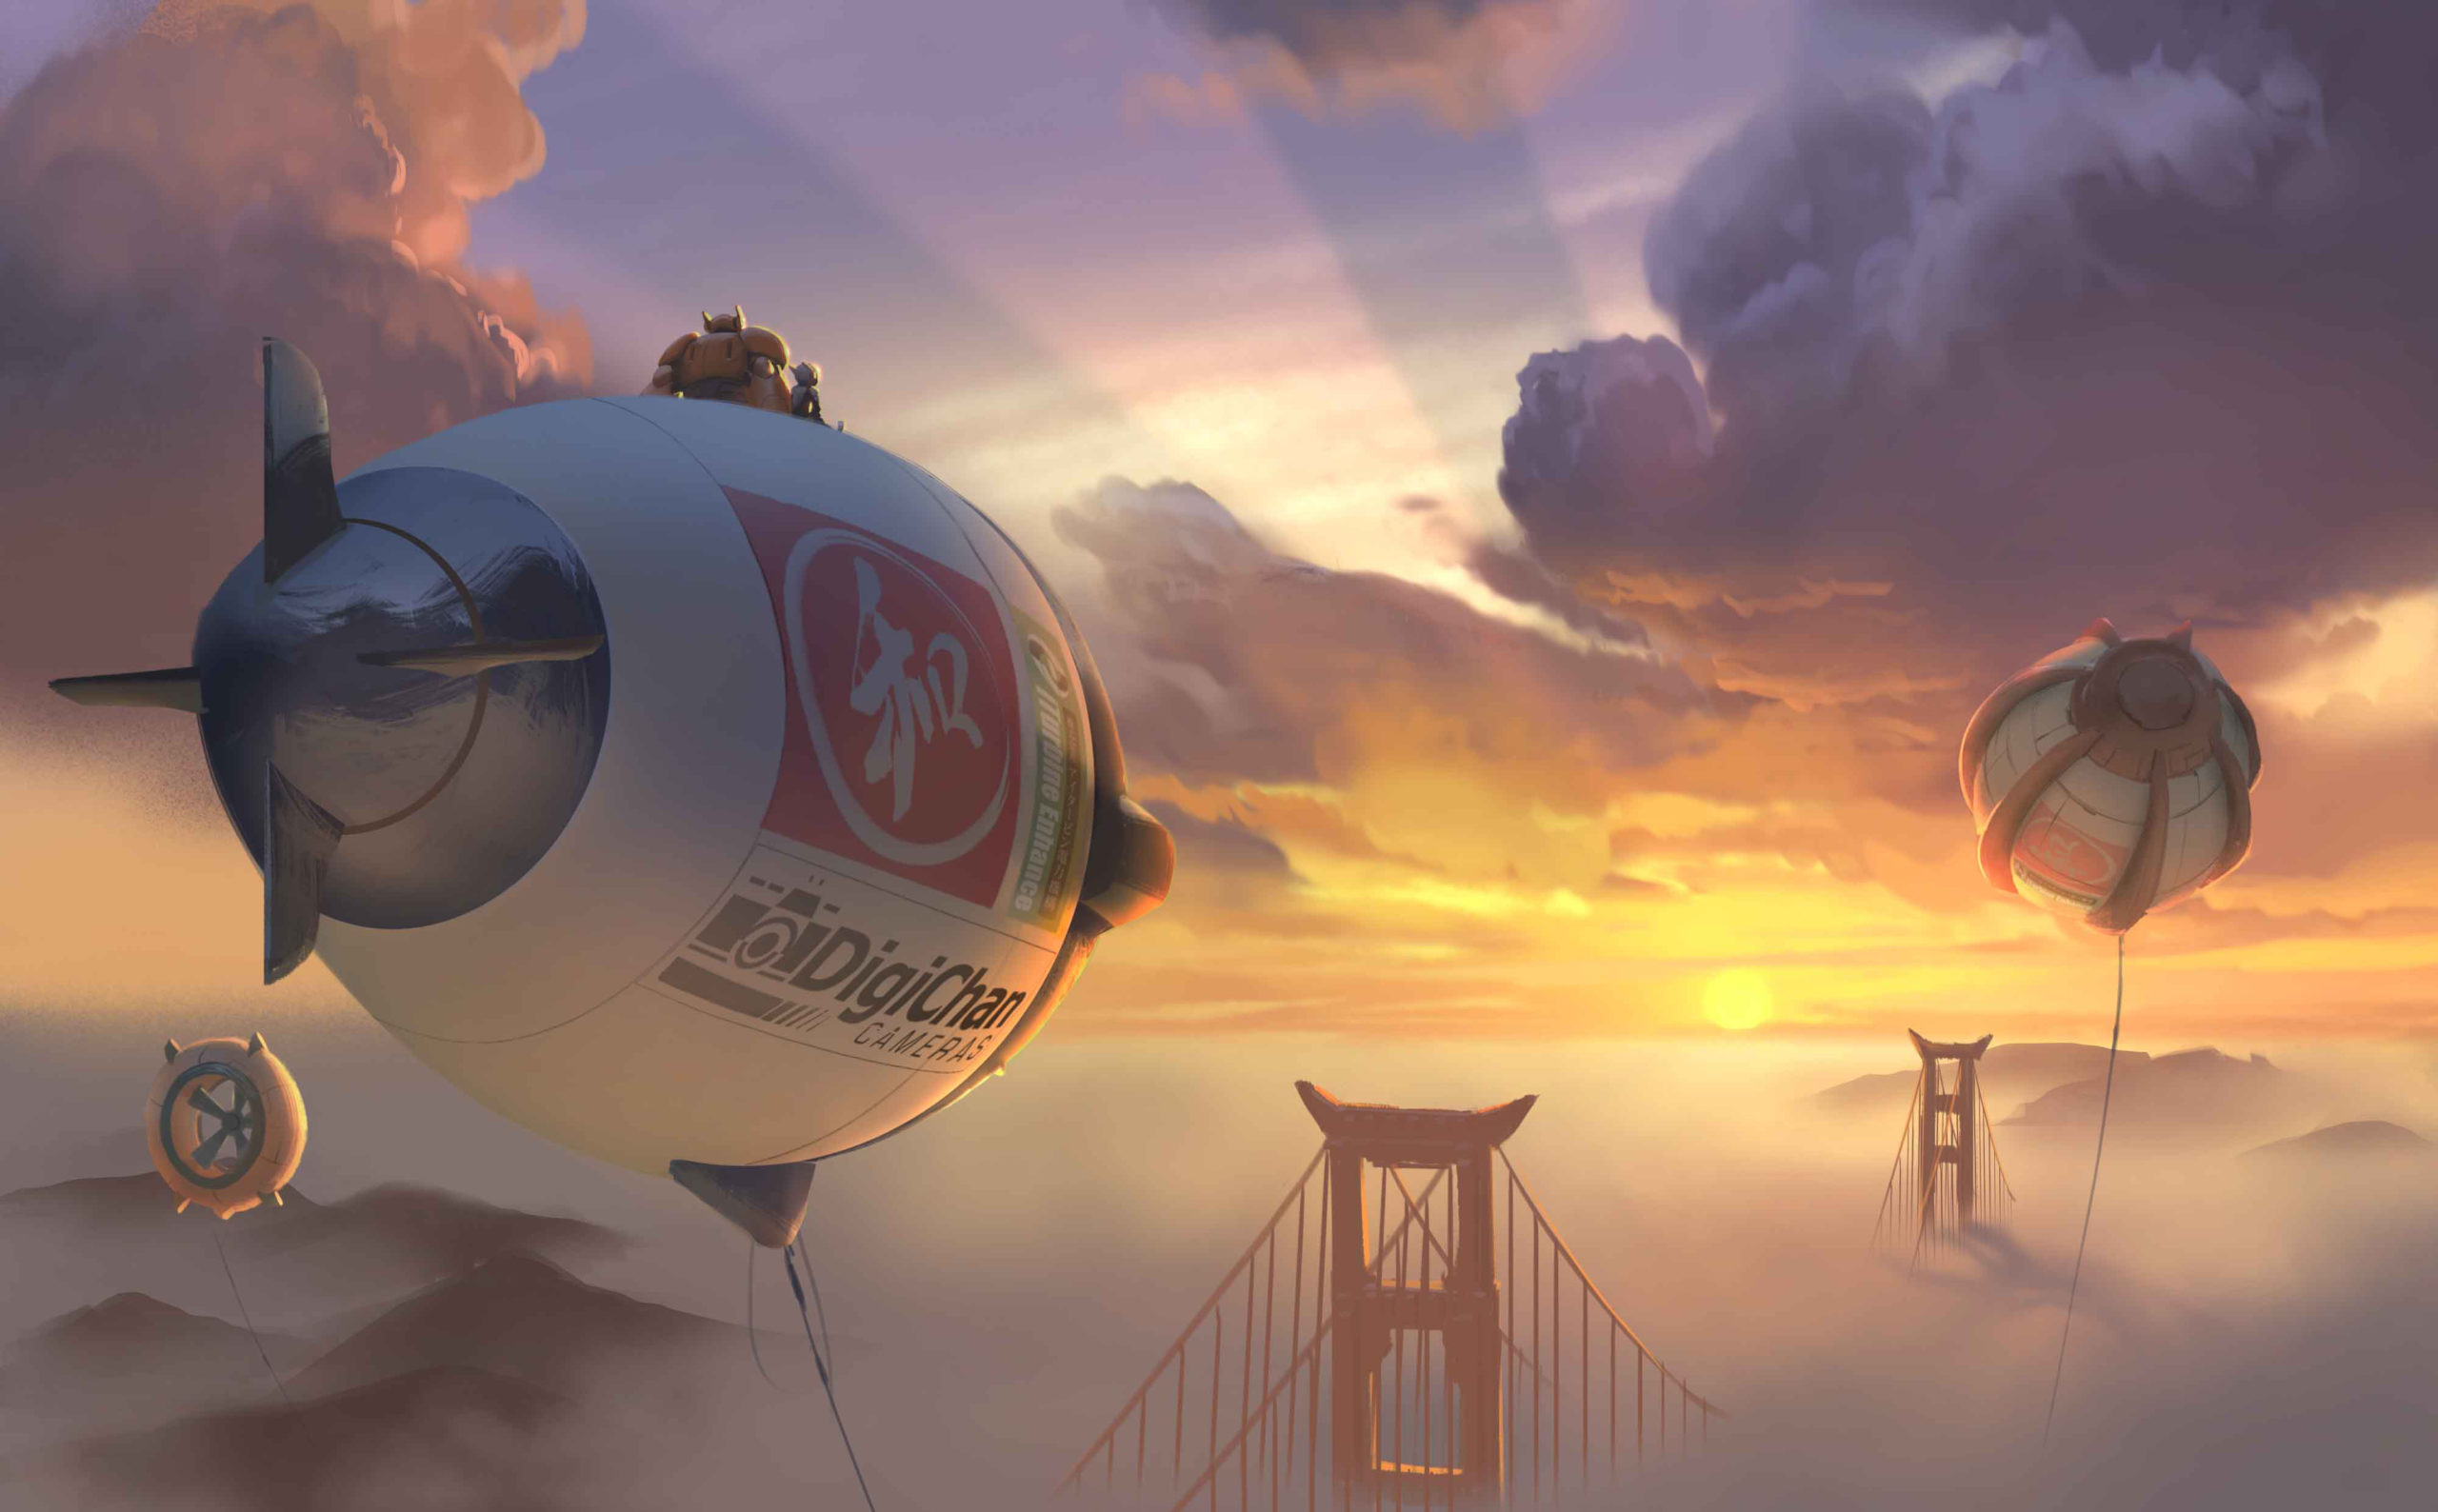 A Tour Of ‘San Fransokyo’, The Hybrid City Disney Built For Big Hero 6